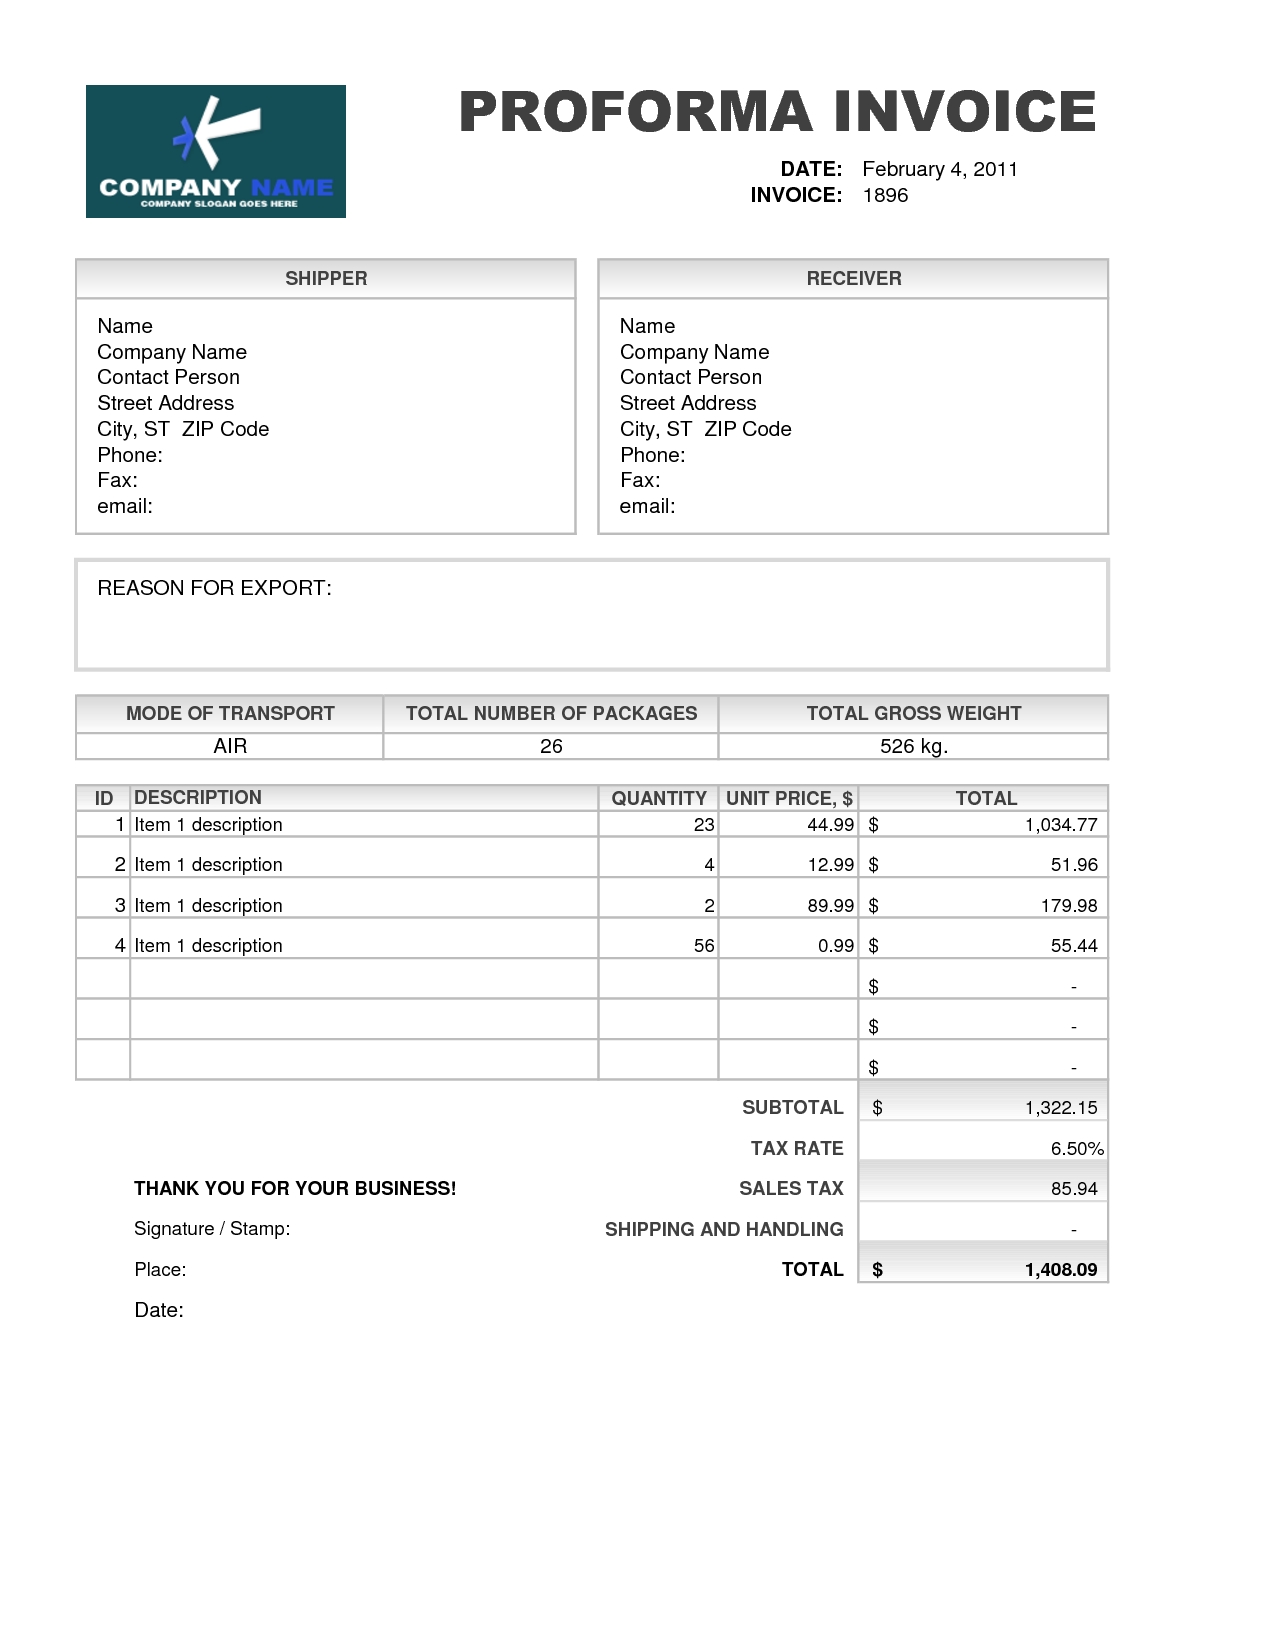 proforma invoice software invoice sample 1275 X 1650